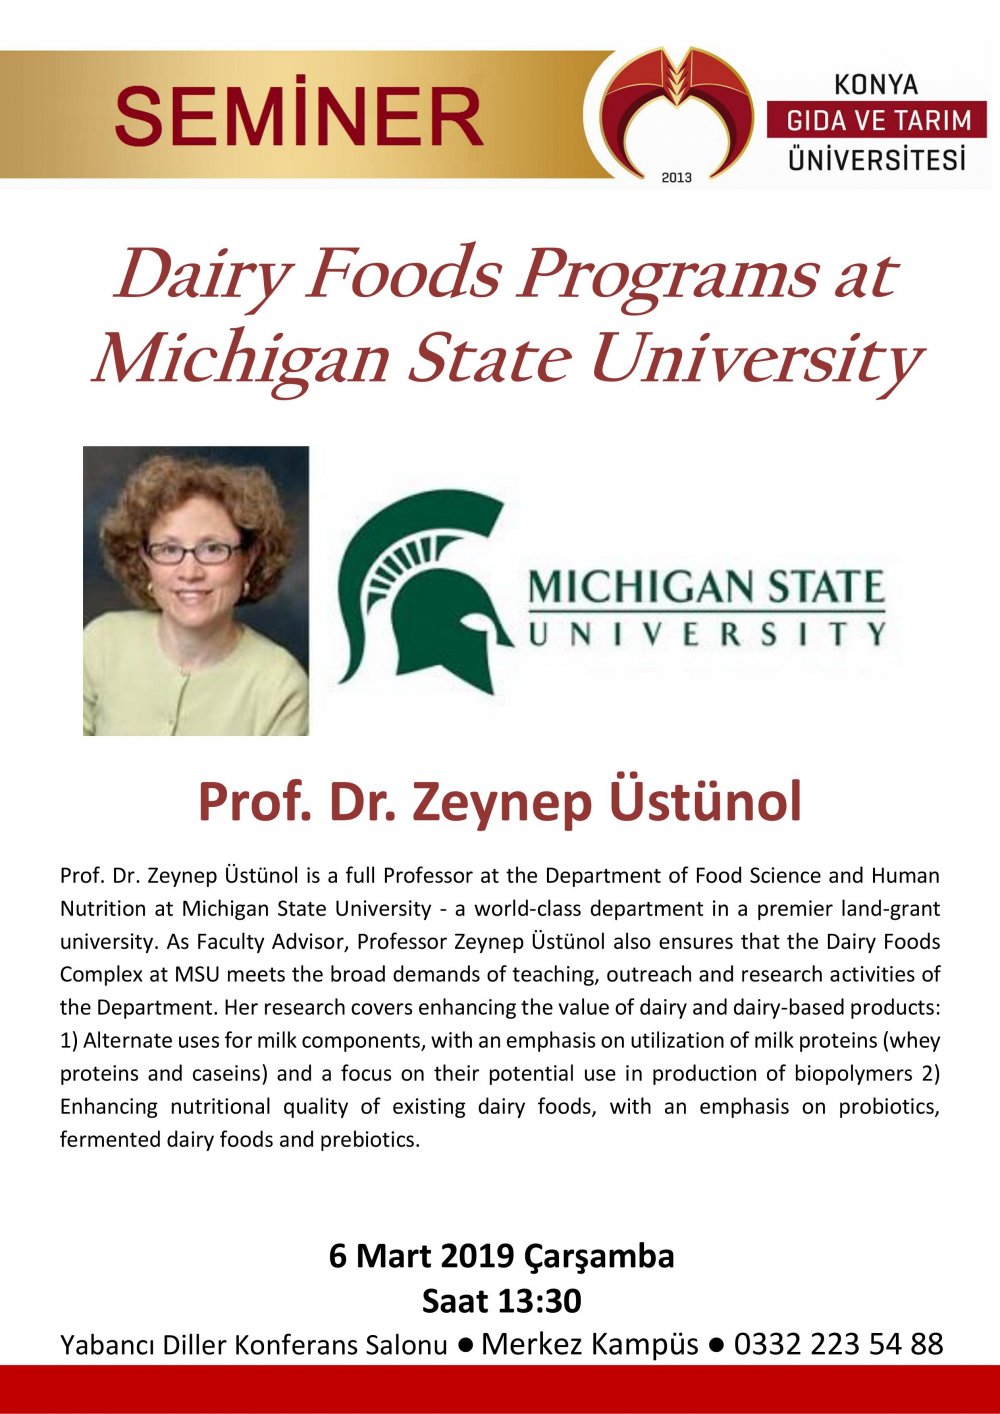 Seminer - Dairy Foods Programs at Michigan State University / 6 Mart Çarşamba 13:30